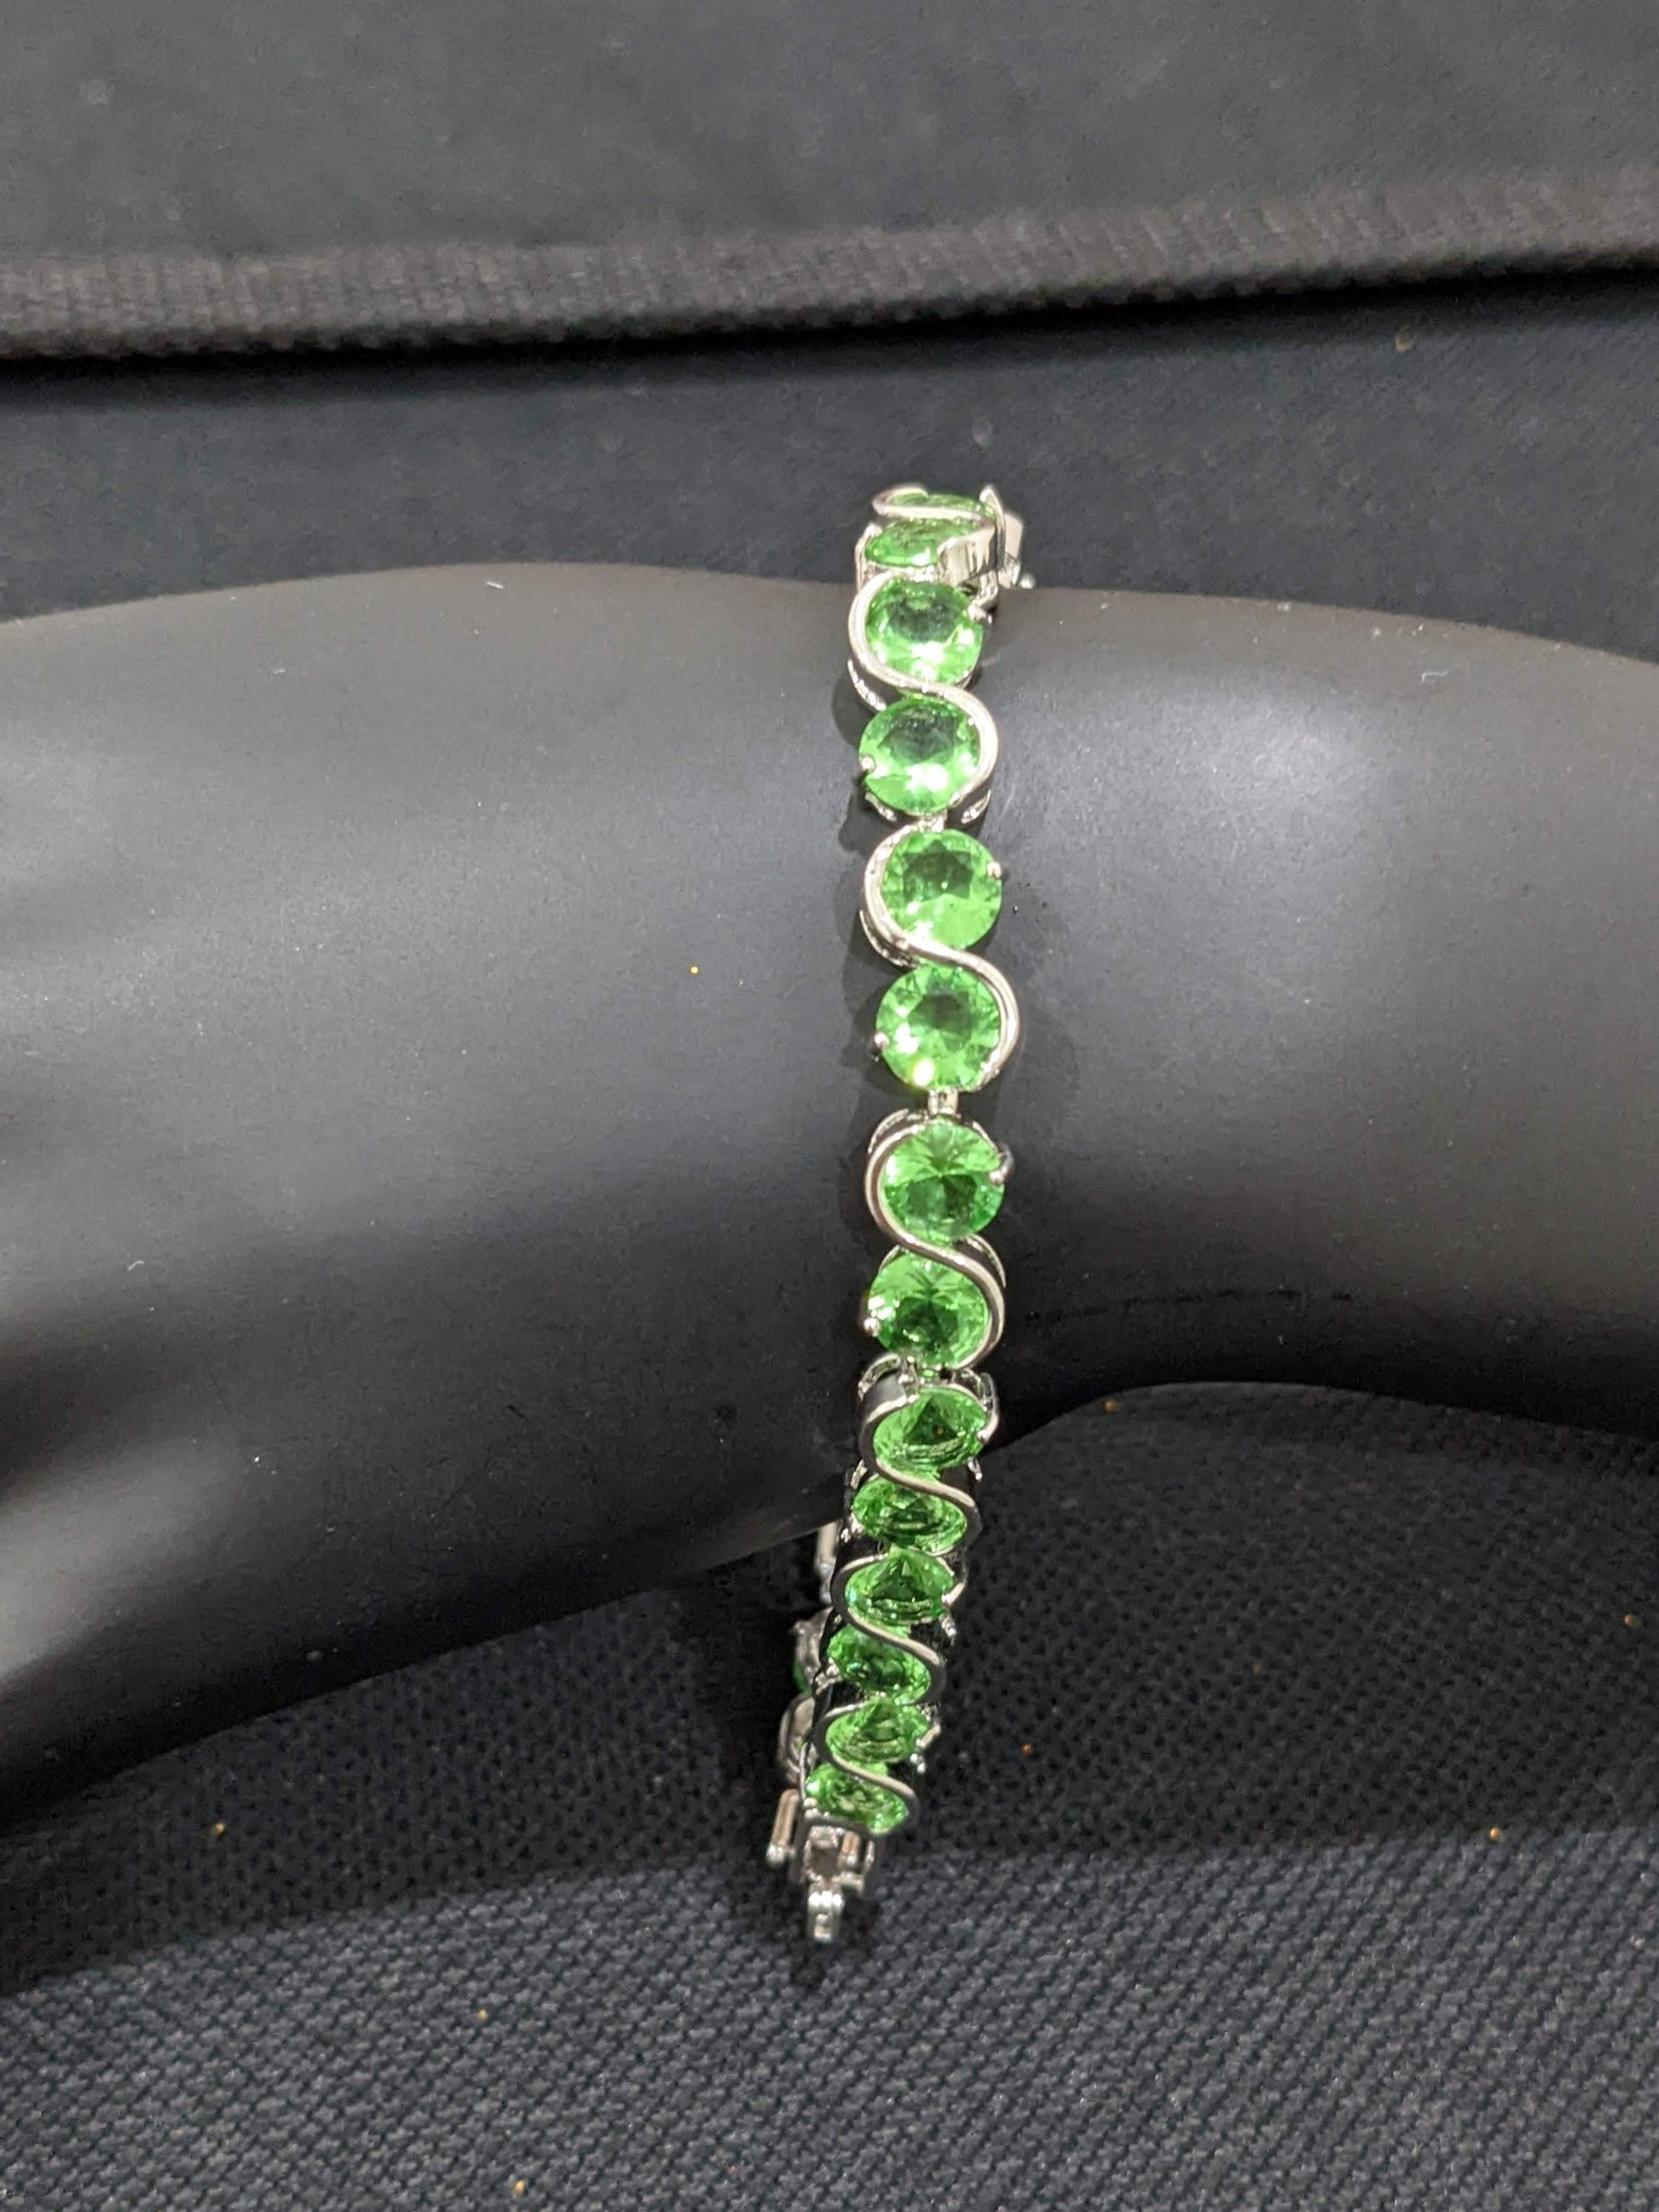 Light green CZ stone Bracelet - Simpliful